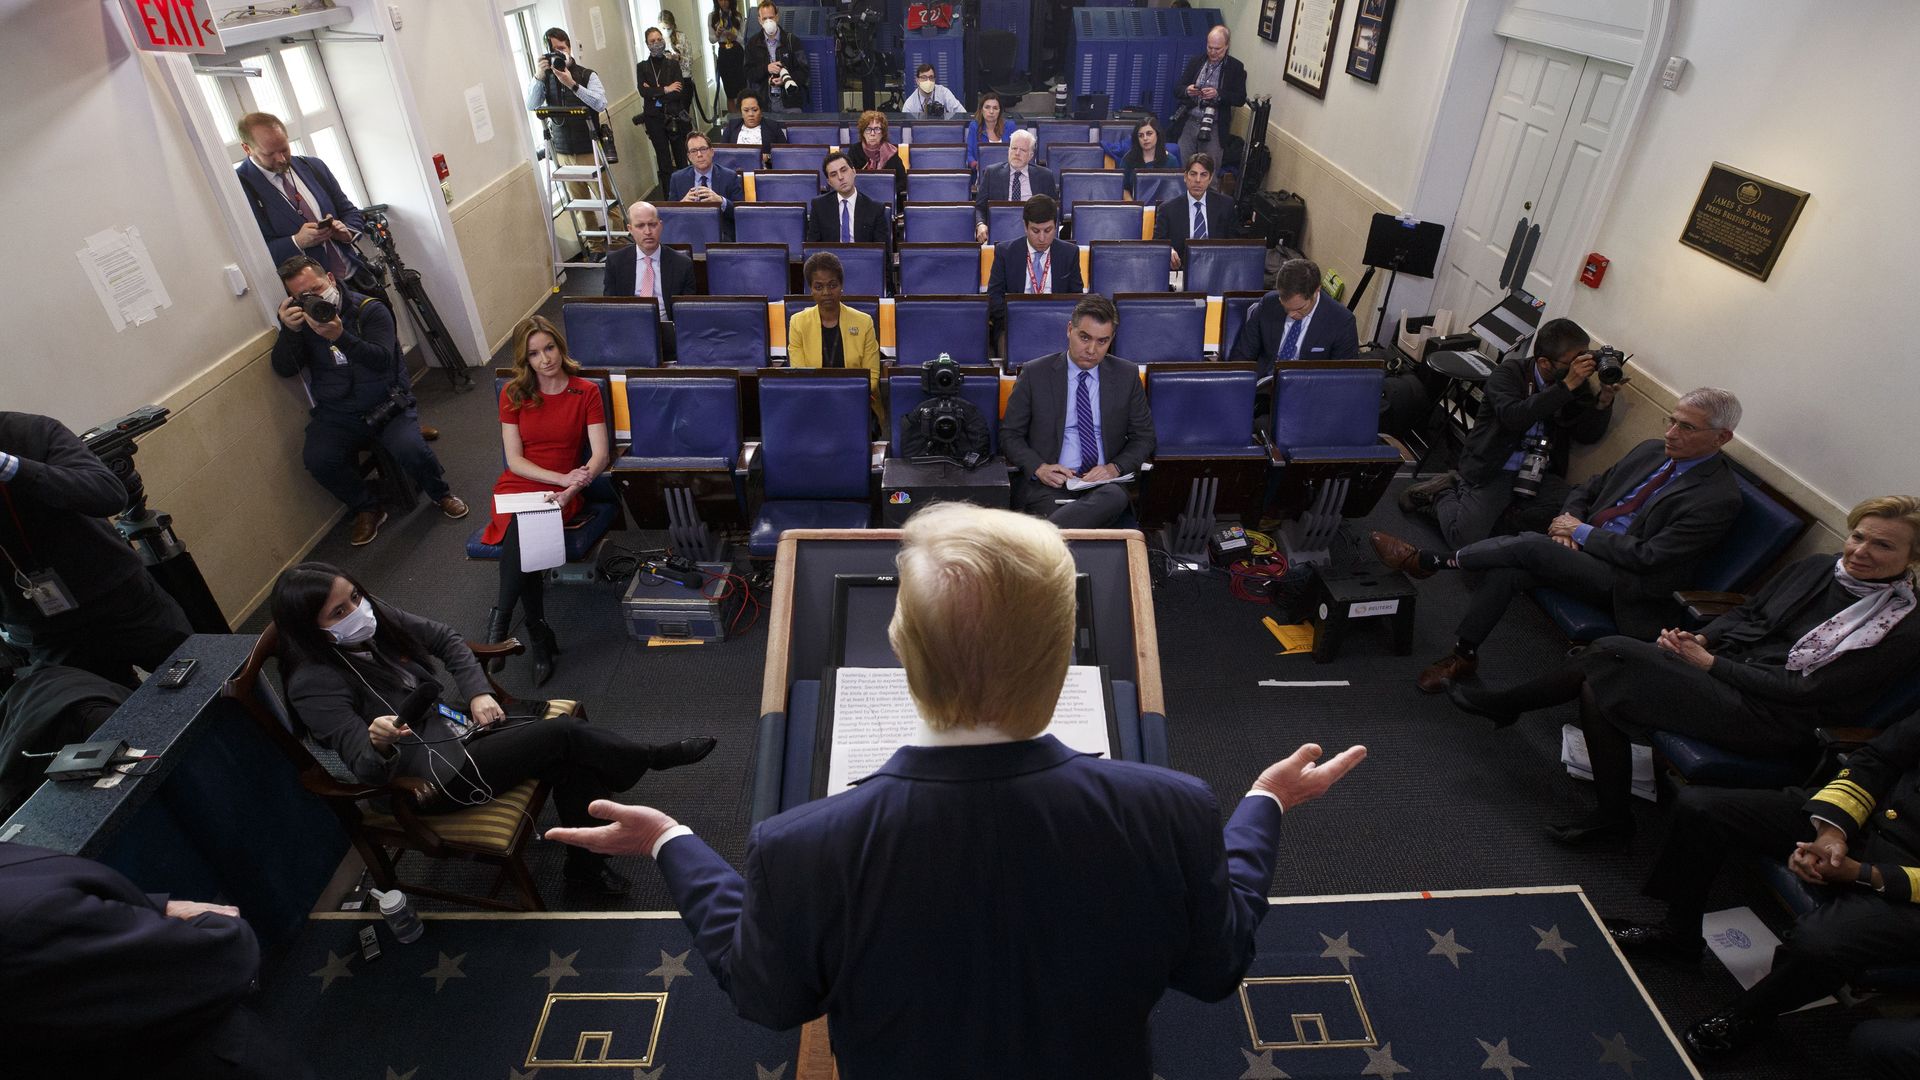 Trump addressing briefing room